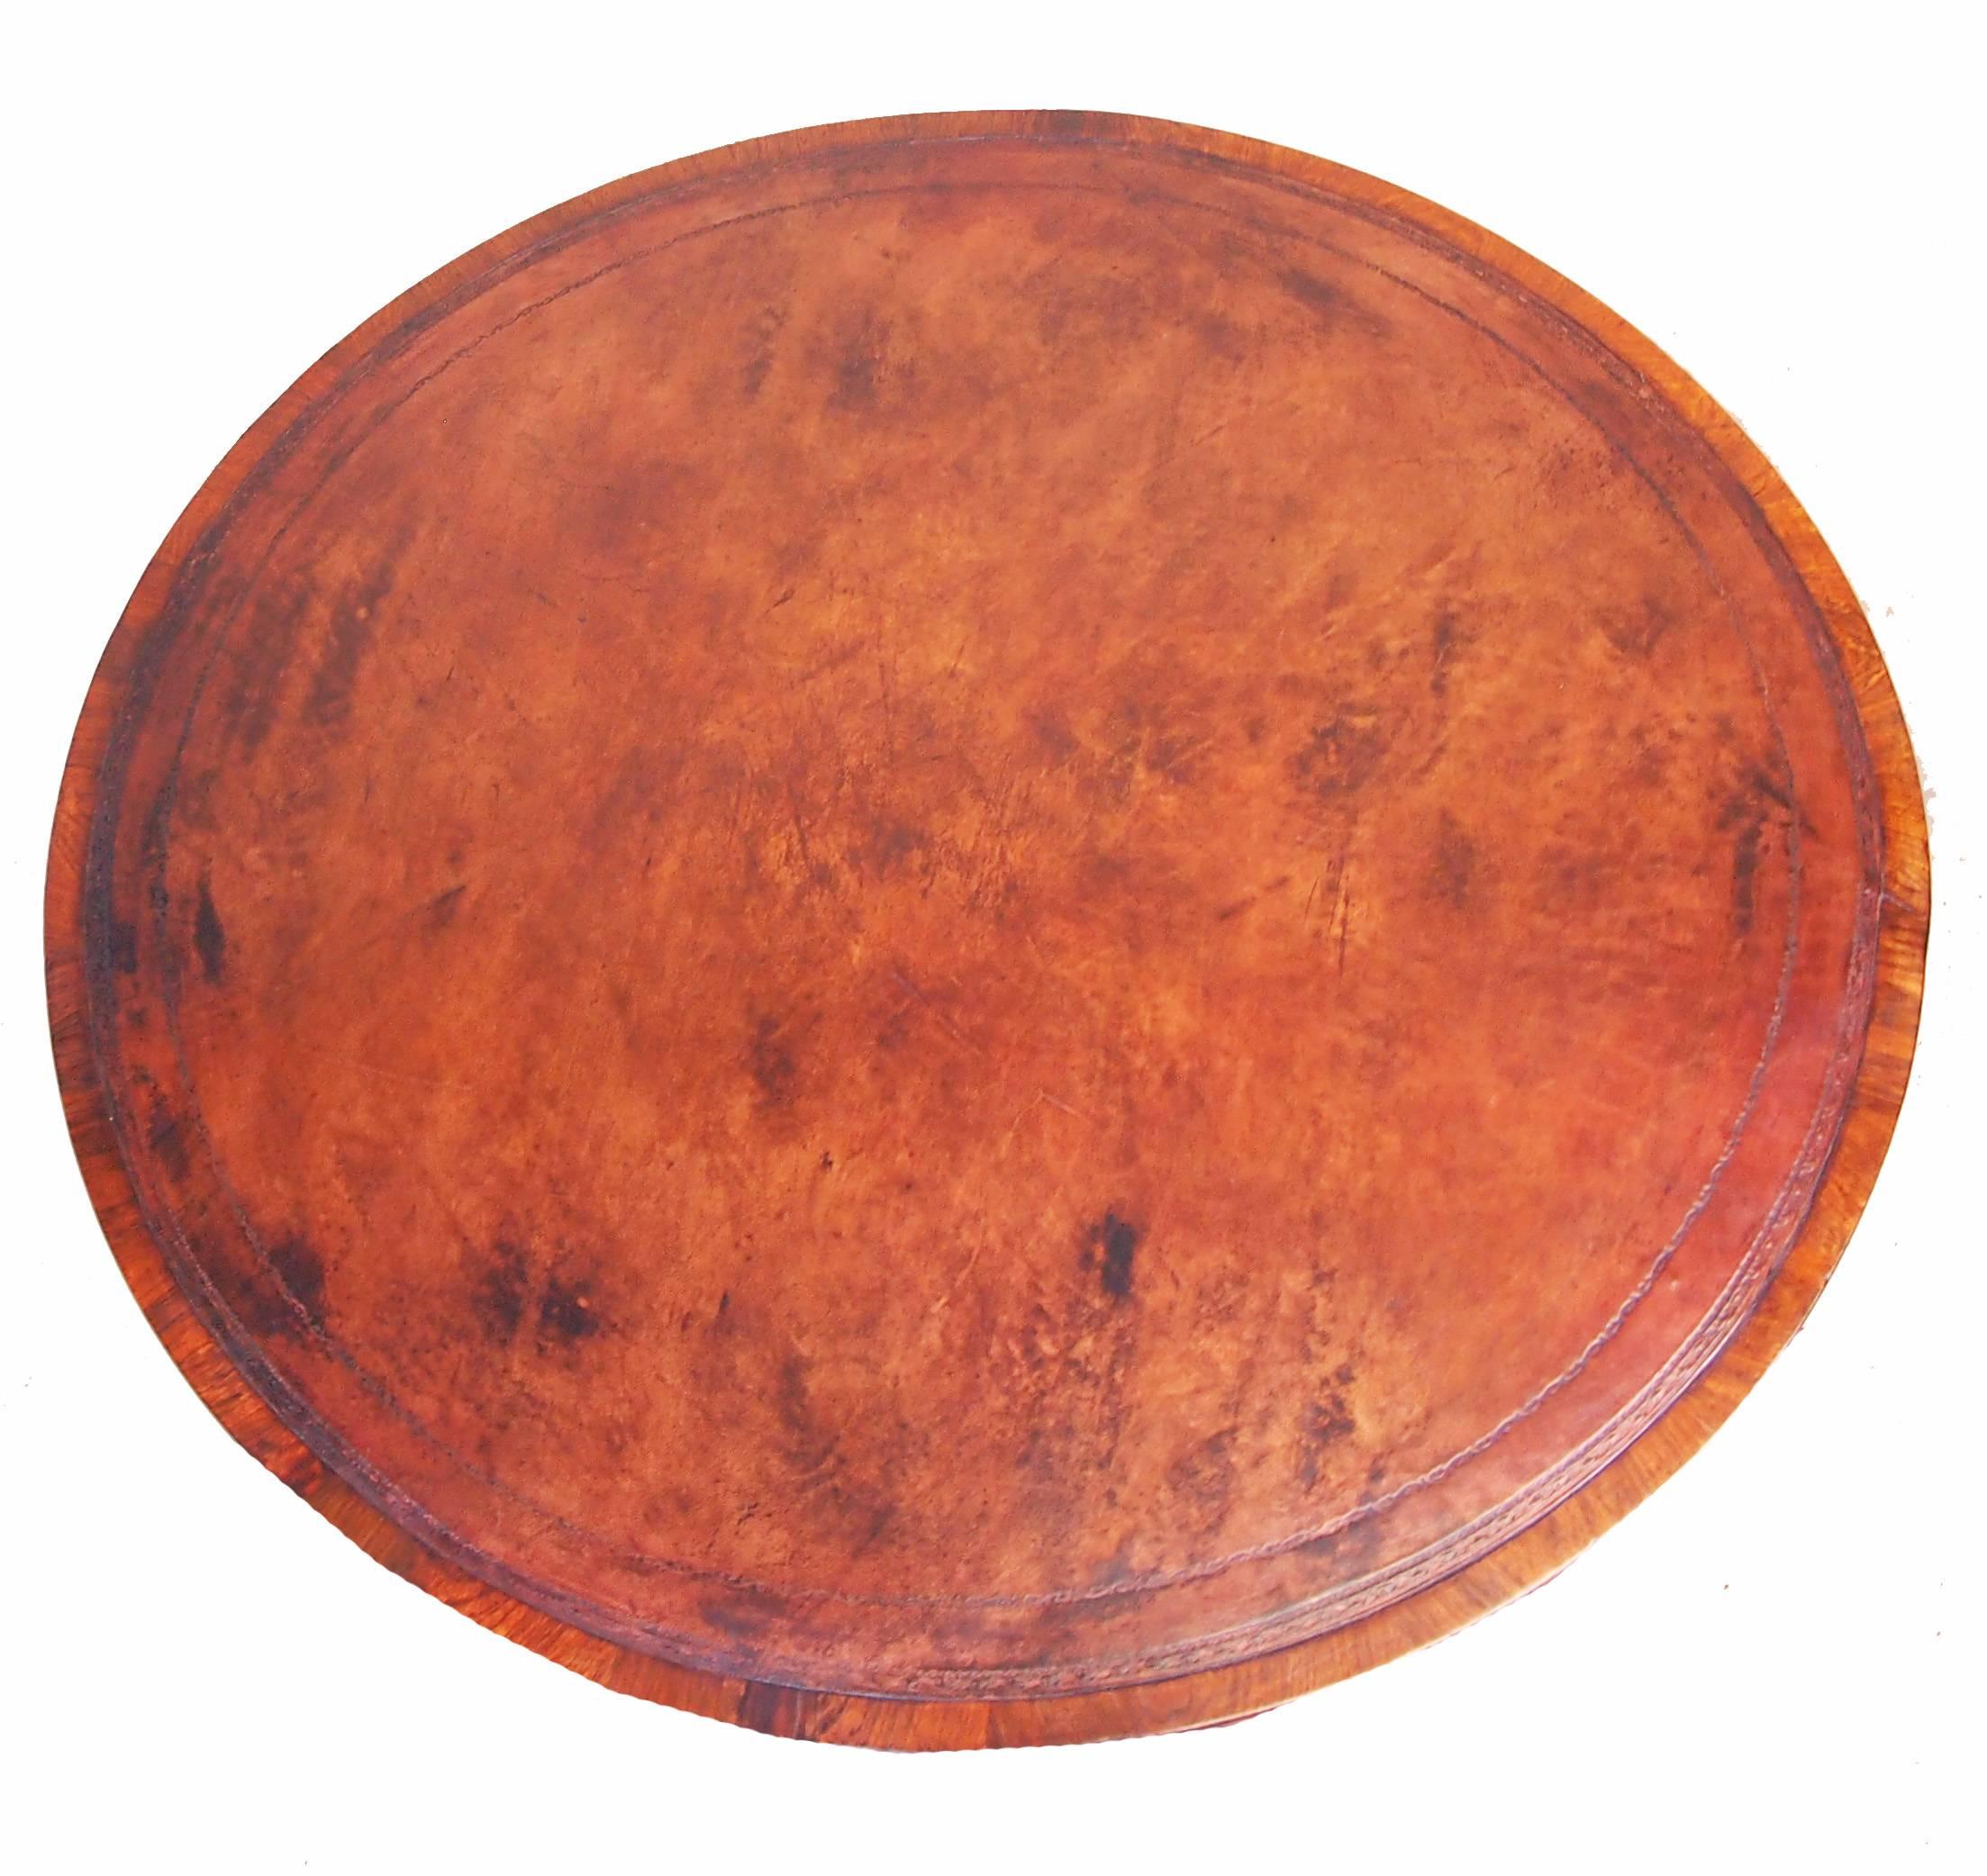 antique drum table for sale